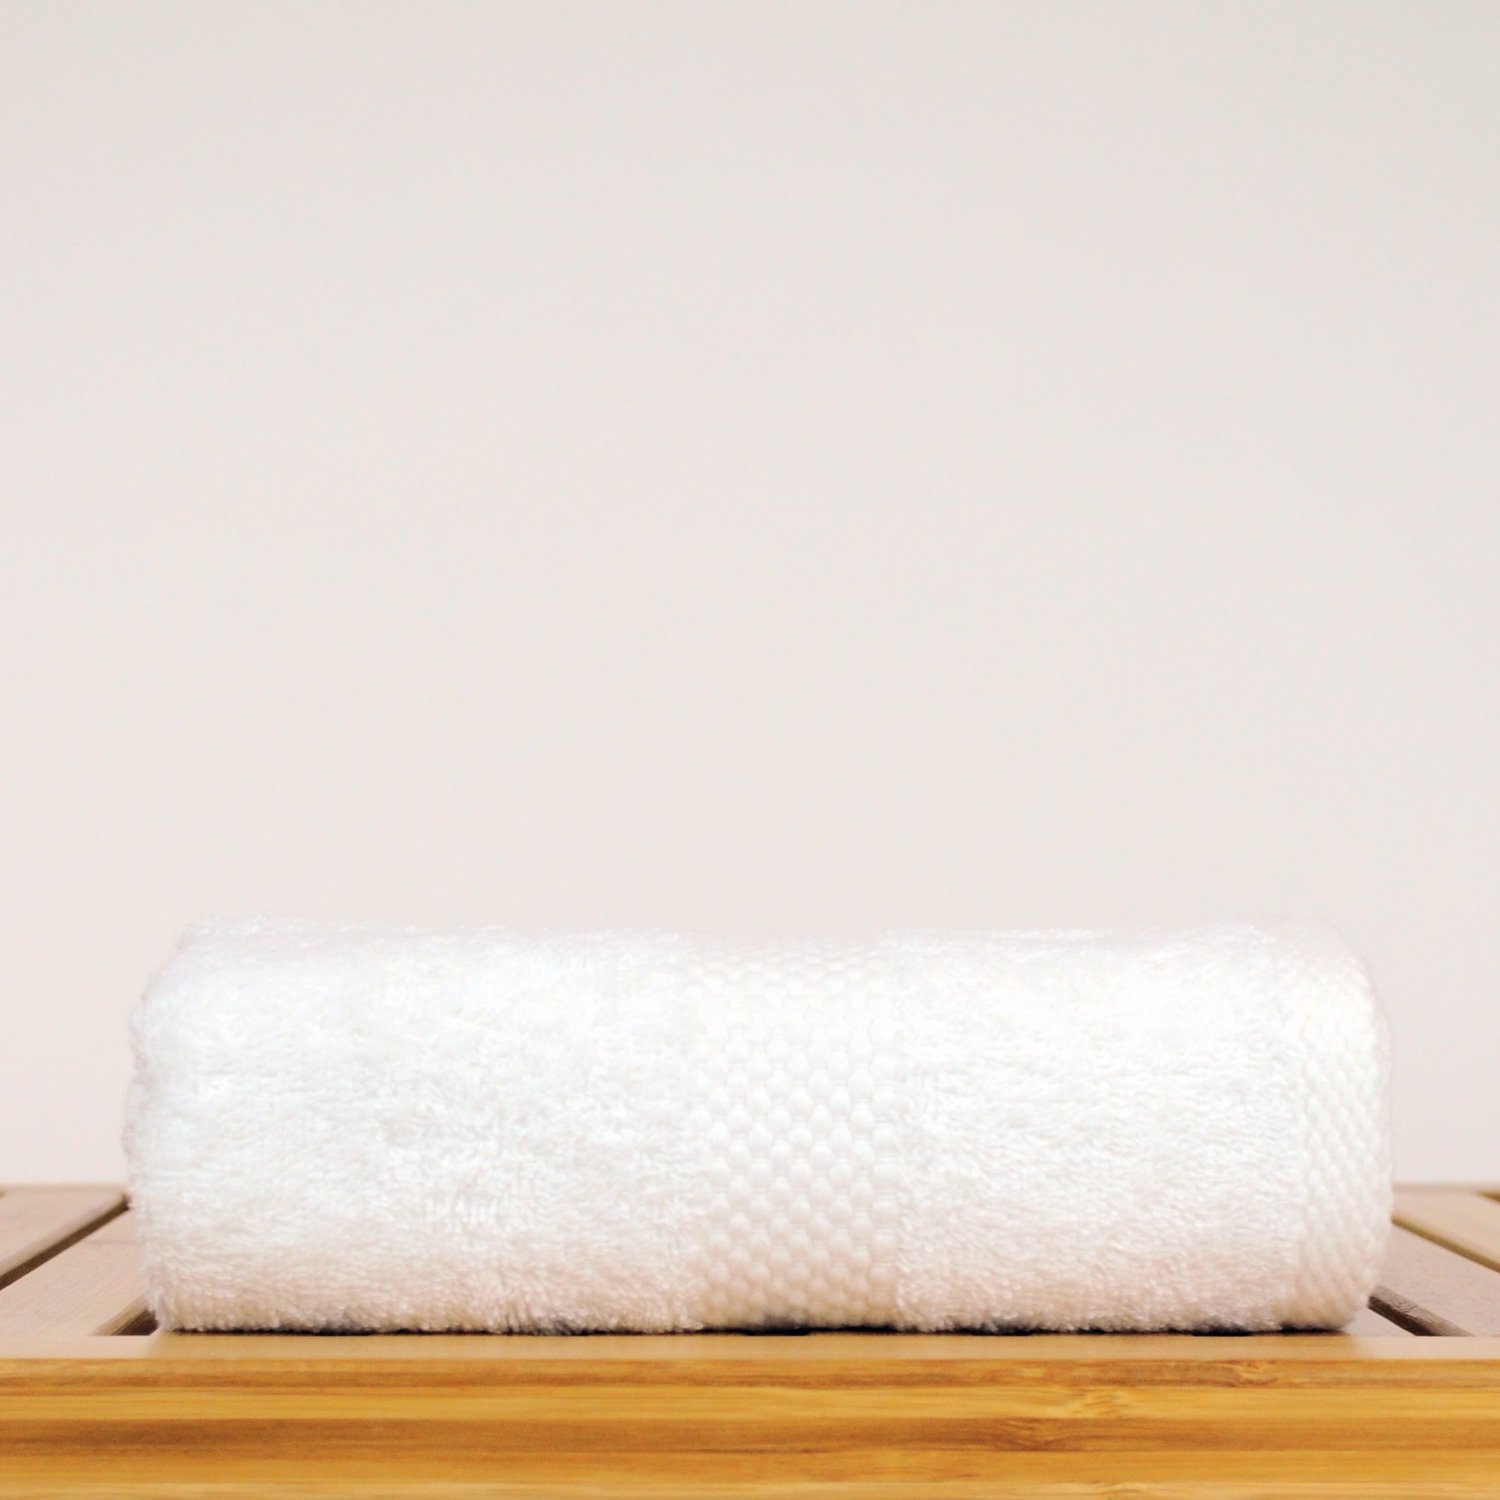 20" x 40" 5 lbs/doz - %100 Turkish Cotton White Hand Towel - Honeycomb Border-Robemart.com